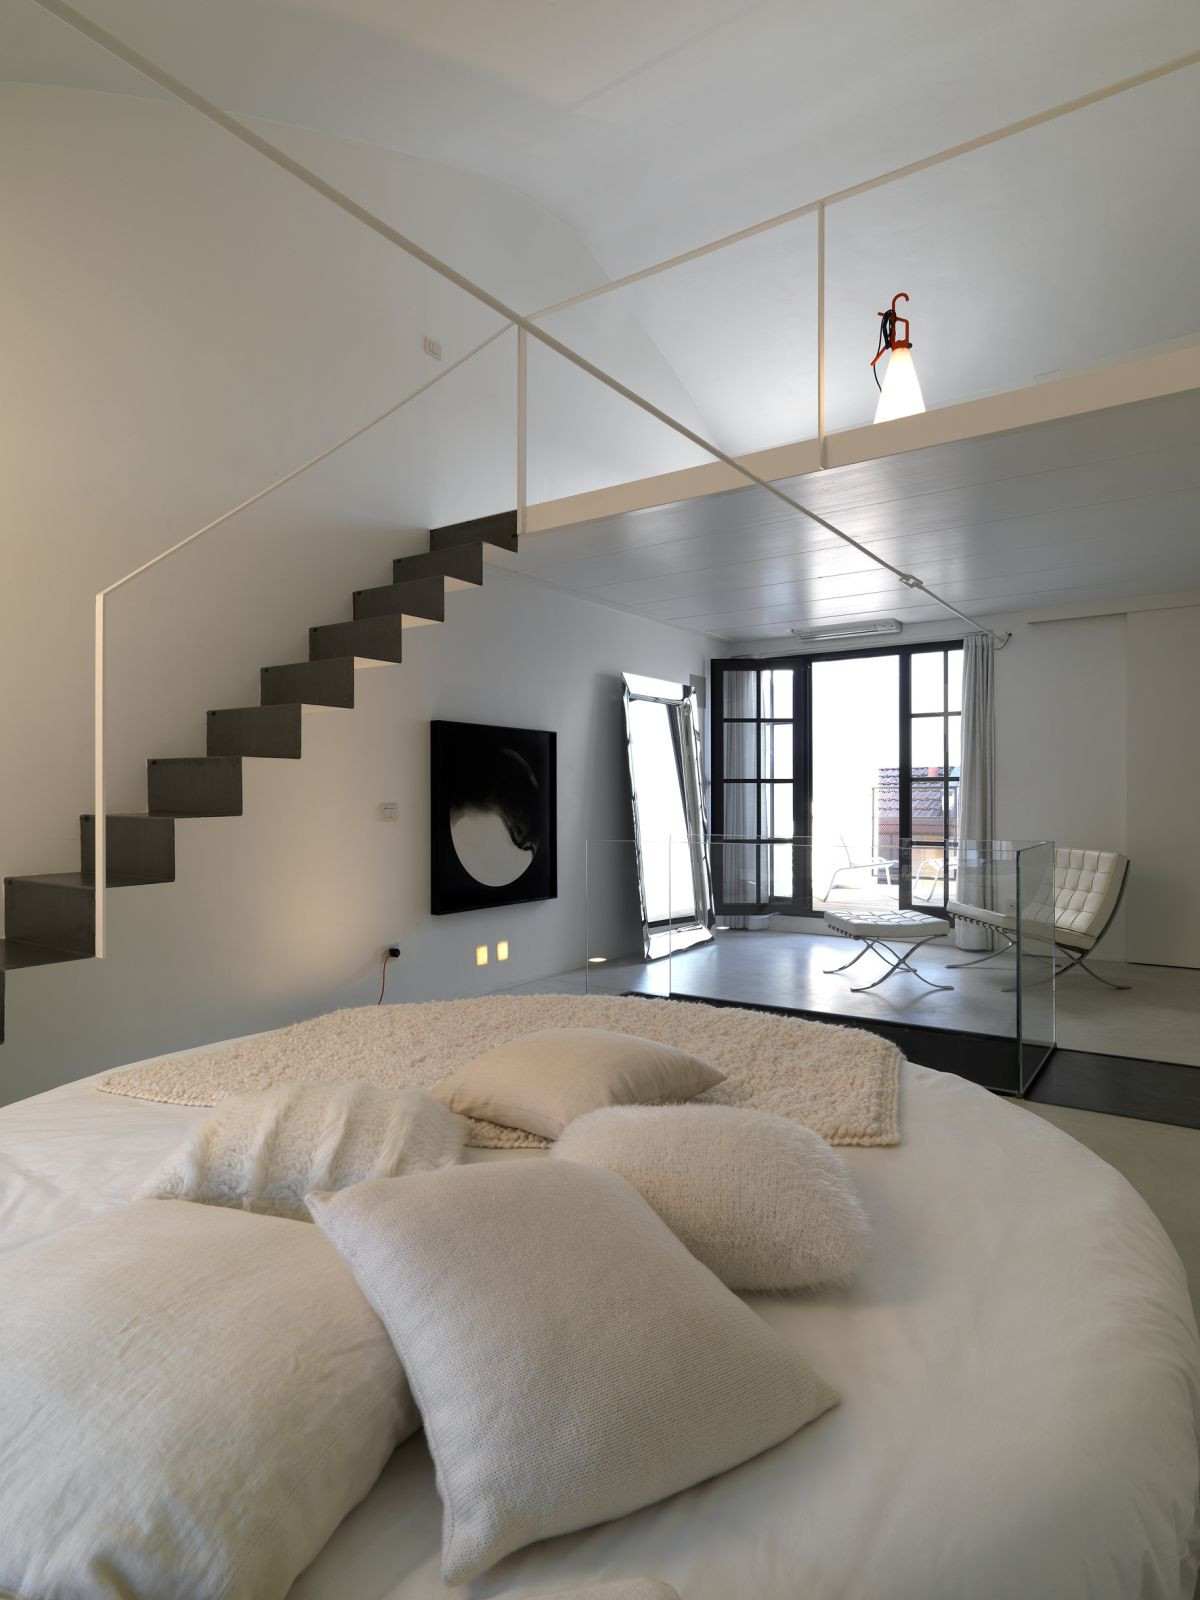 Small Bedroom Layout Ideas
 32 Interior Design Ideas for Loft Bedrooms Interior